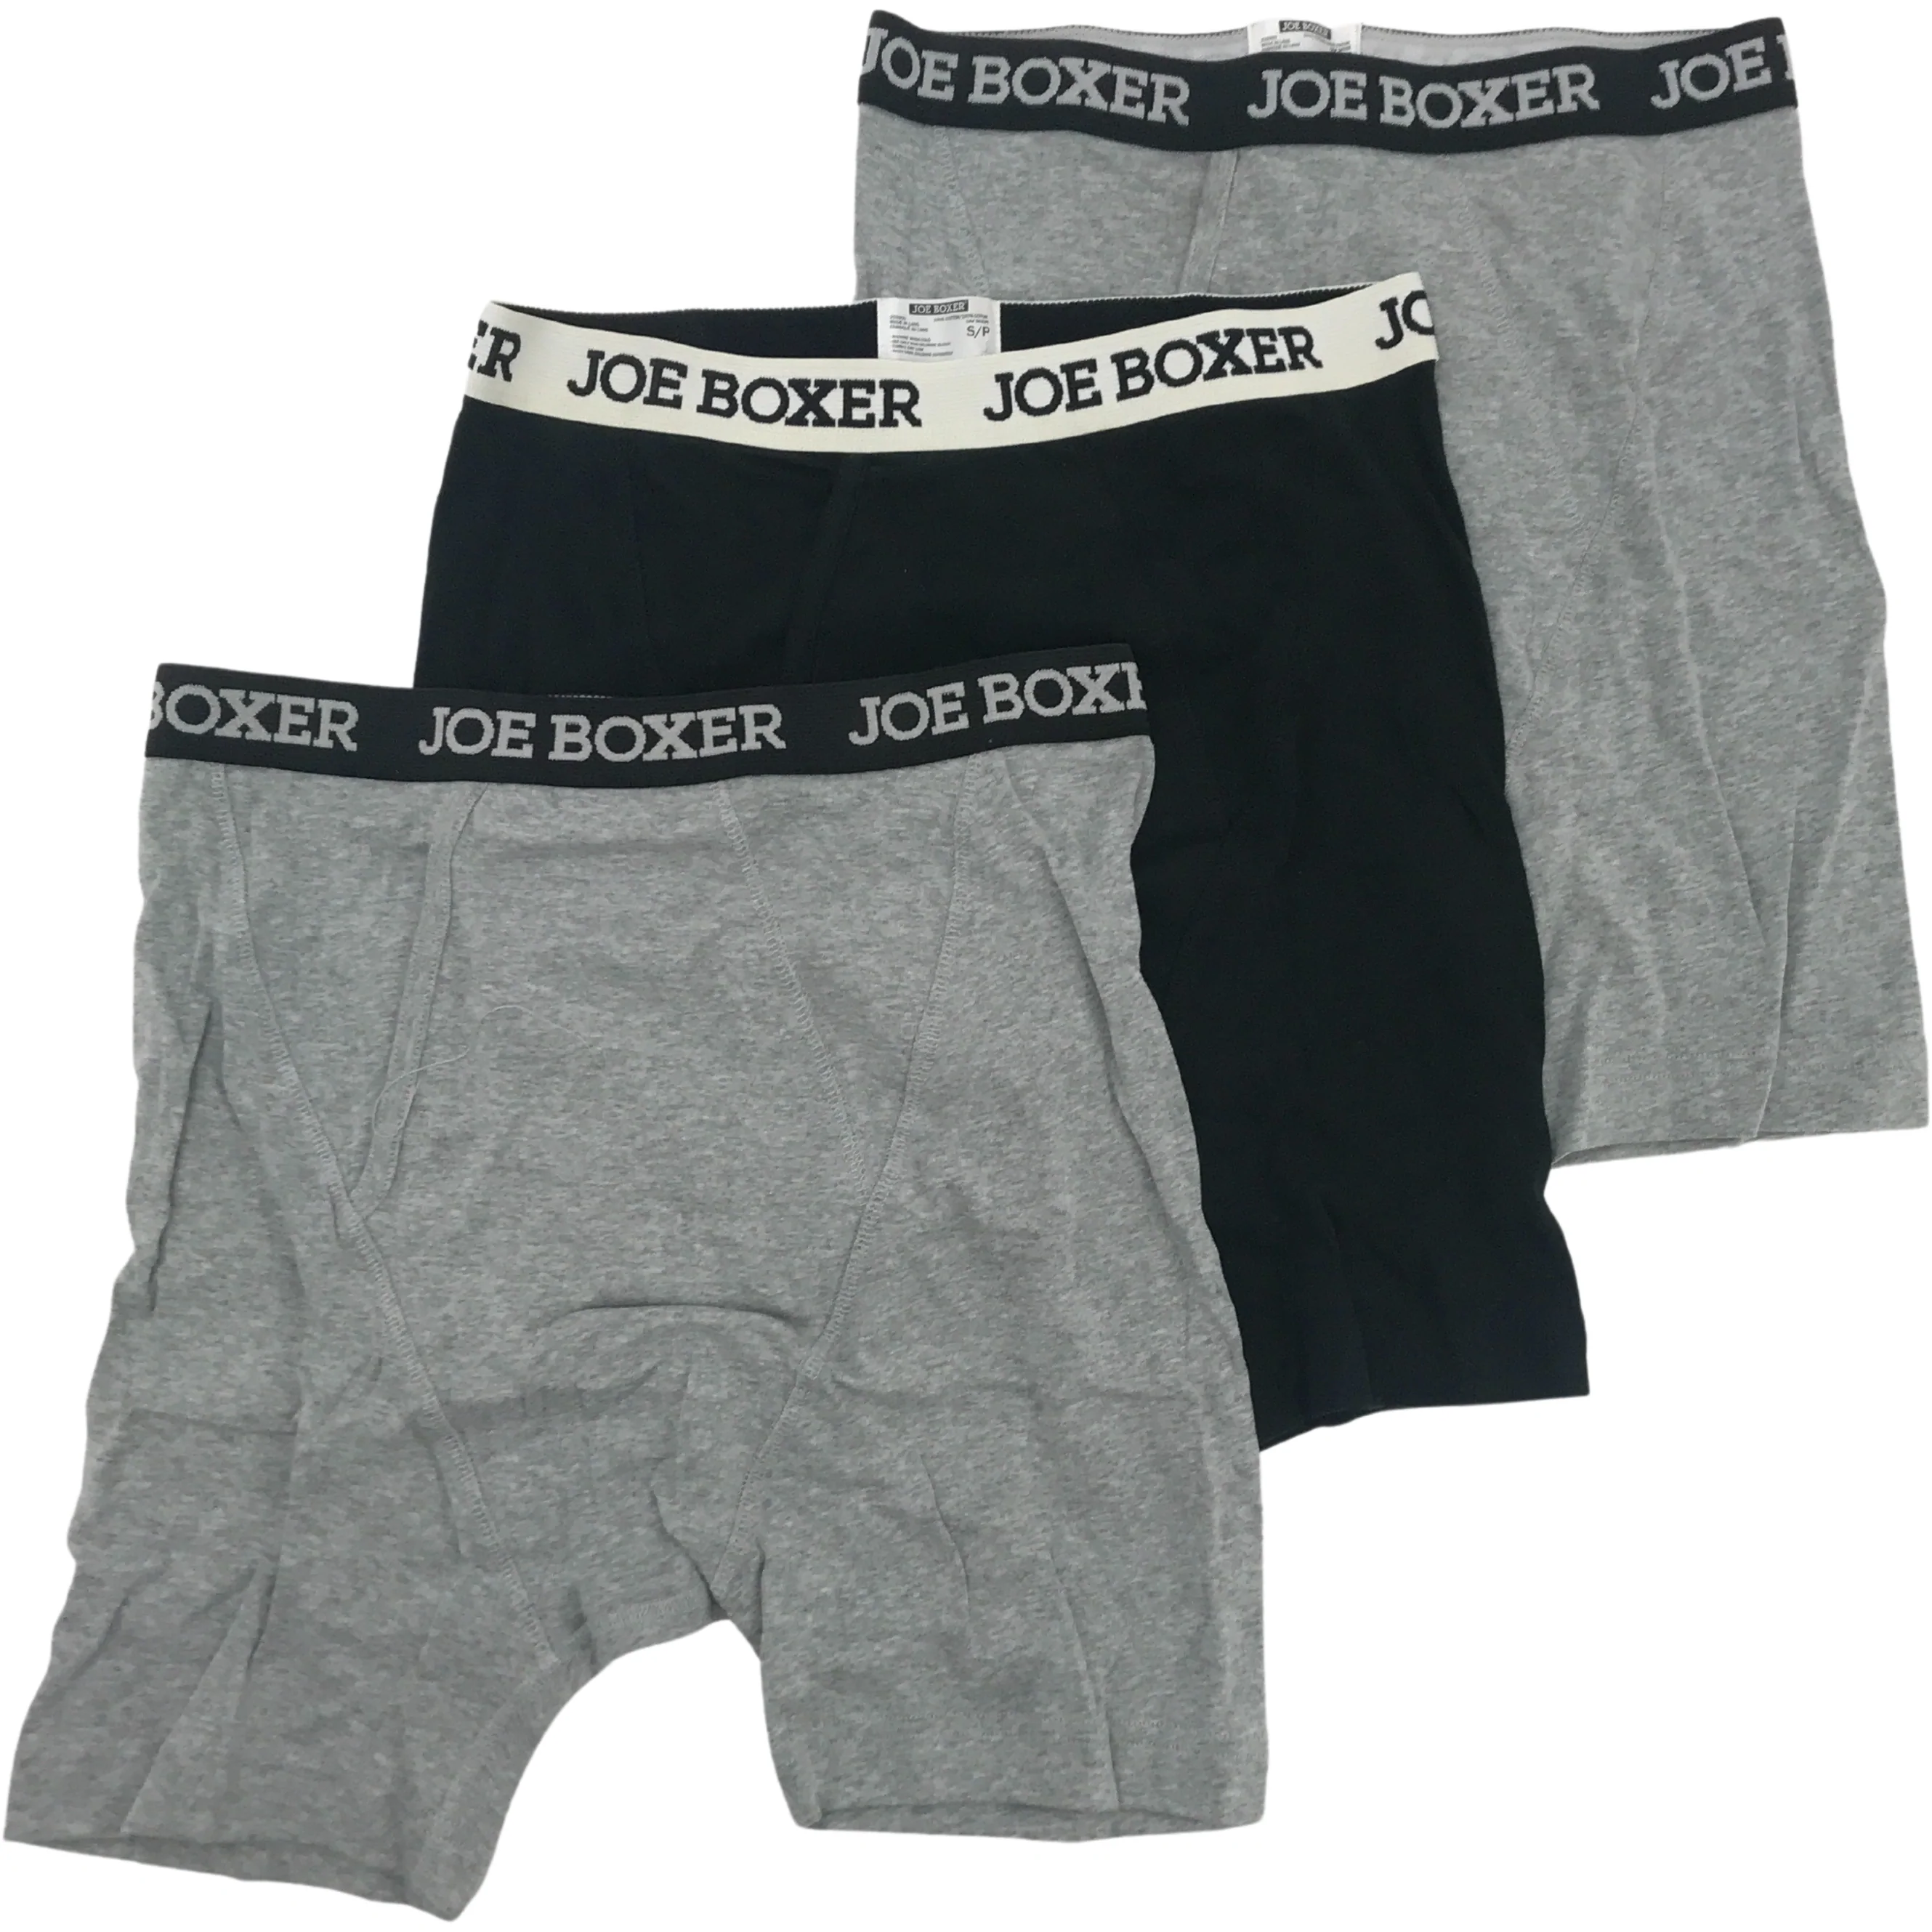 Joe Boxer Men's Underwear / Fitted Boxers / 3 Pack / Grey & Black / Various Sizes